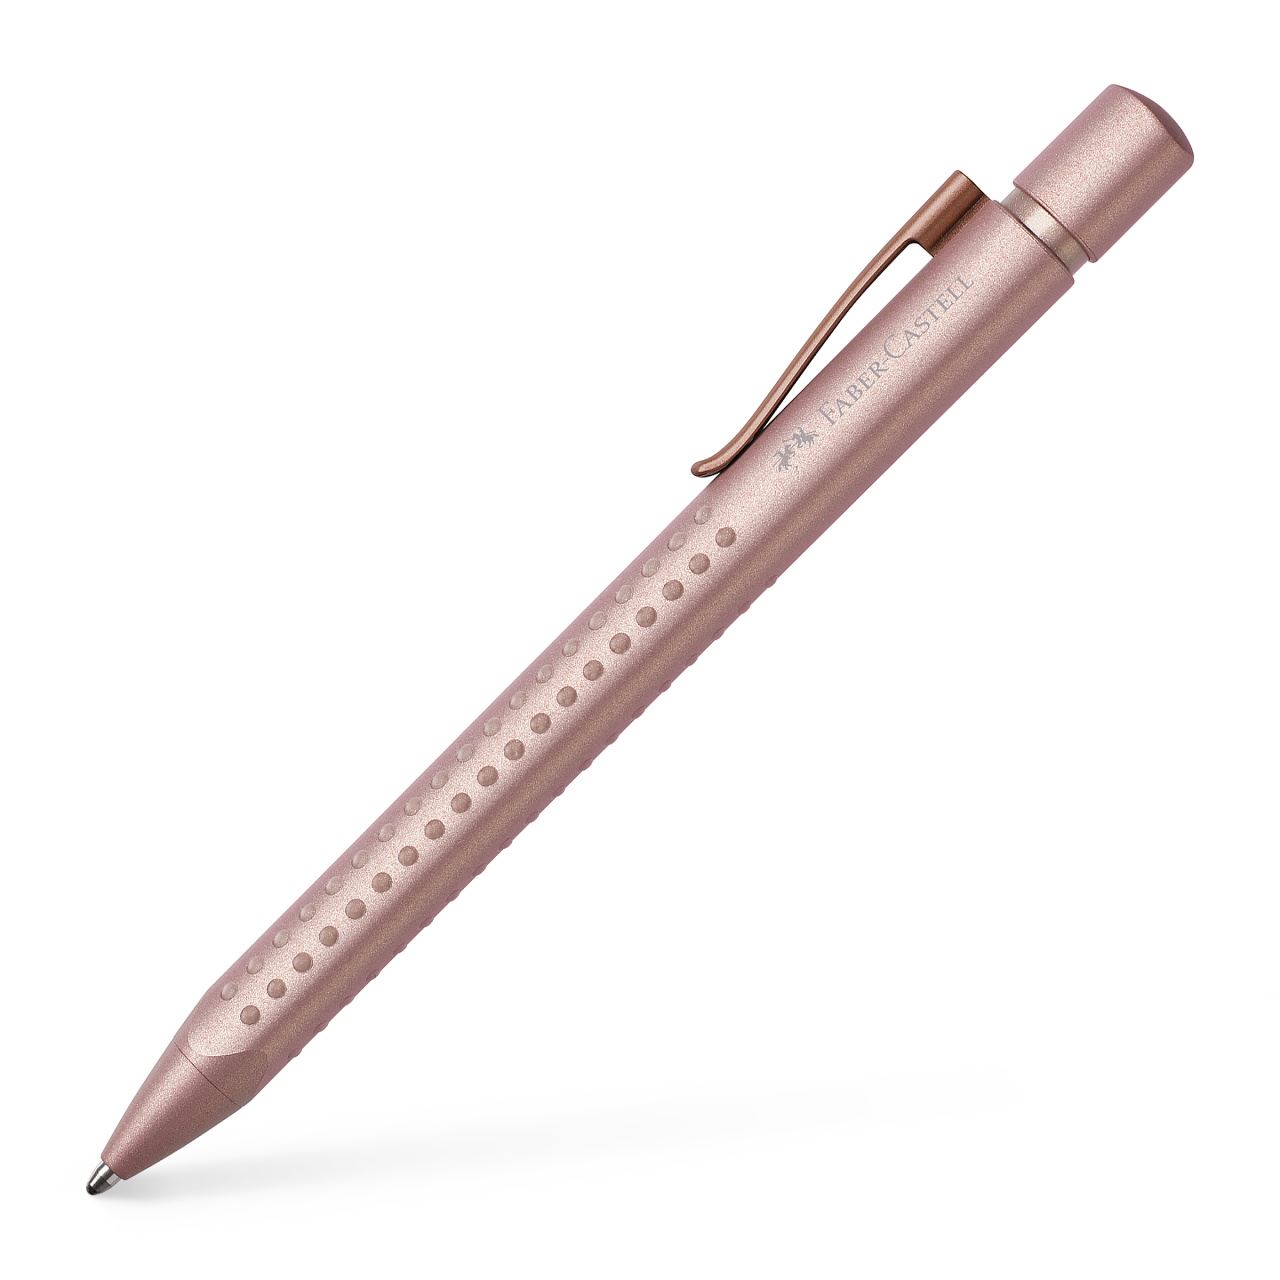 Faber-Castell - Ballpoint pen Grip edition XB rose copper